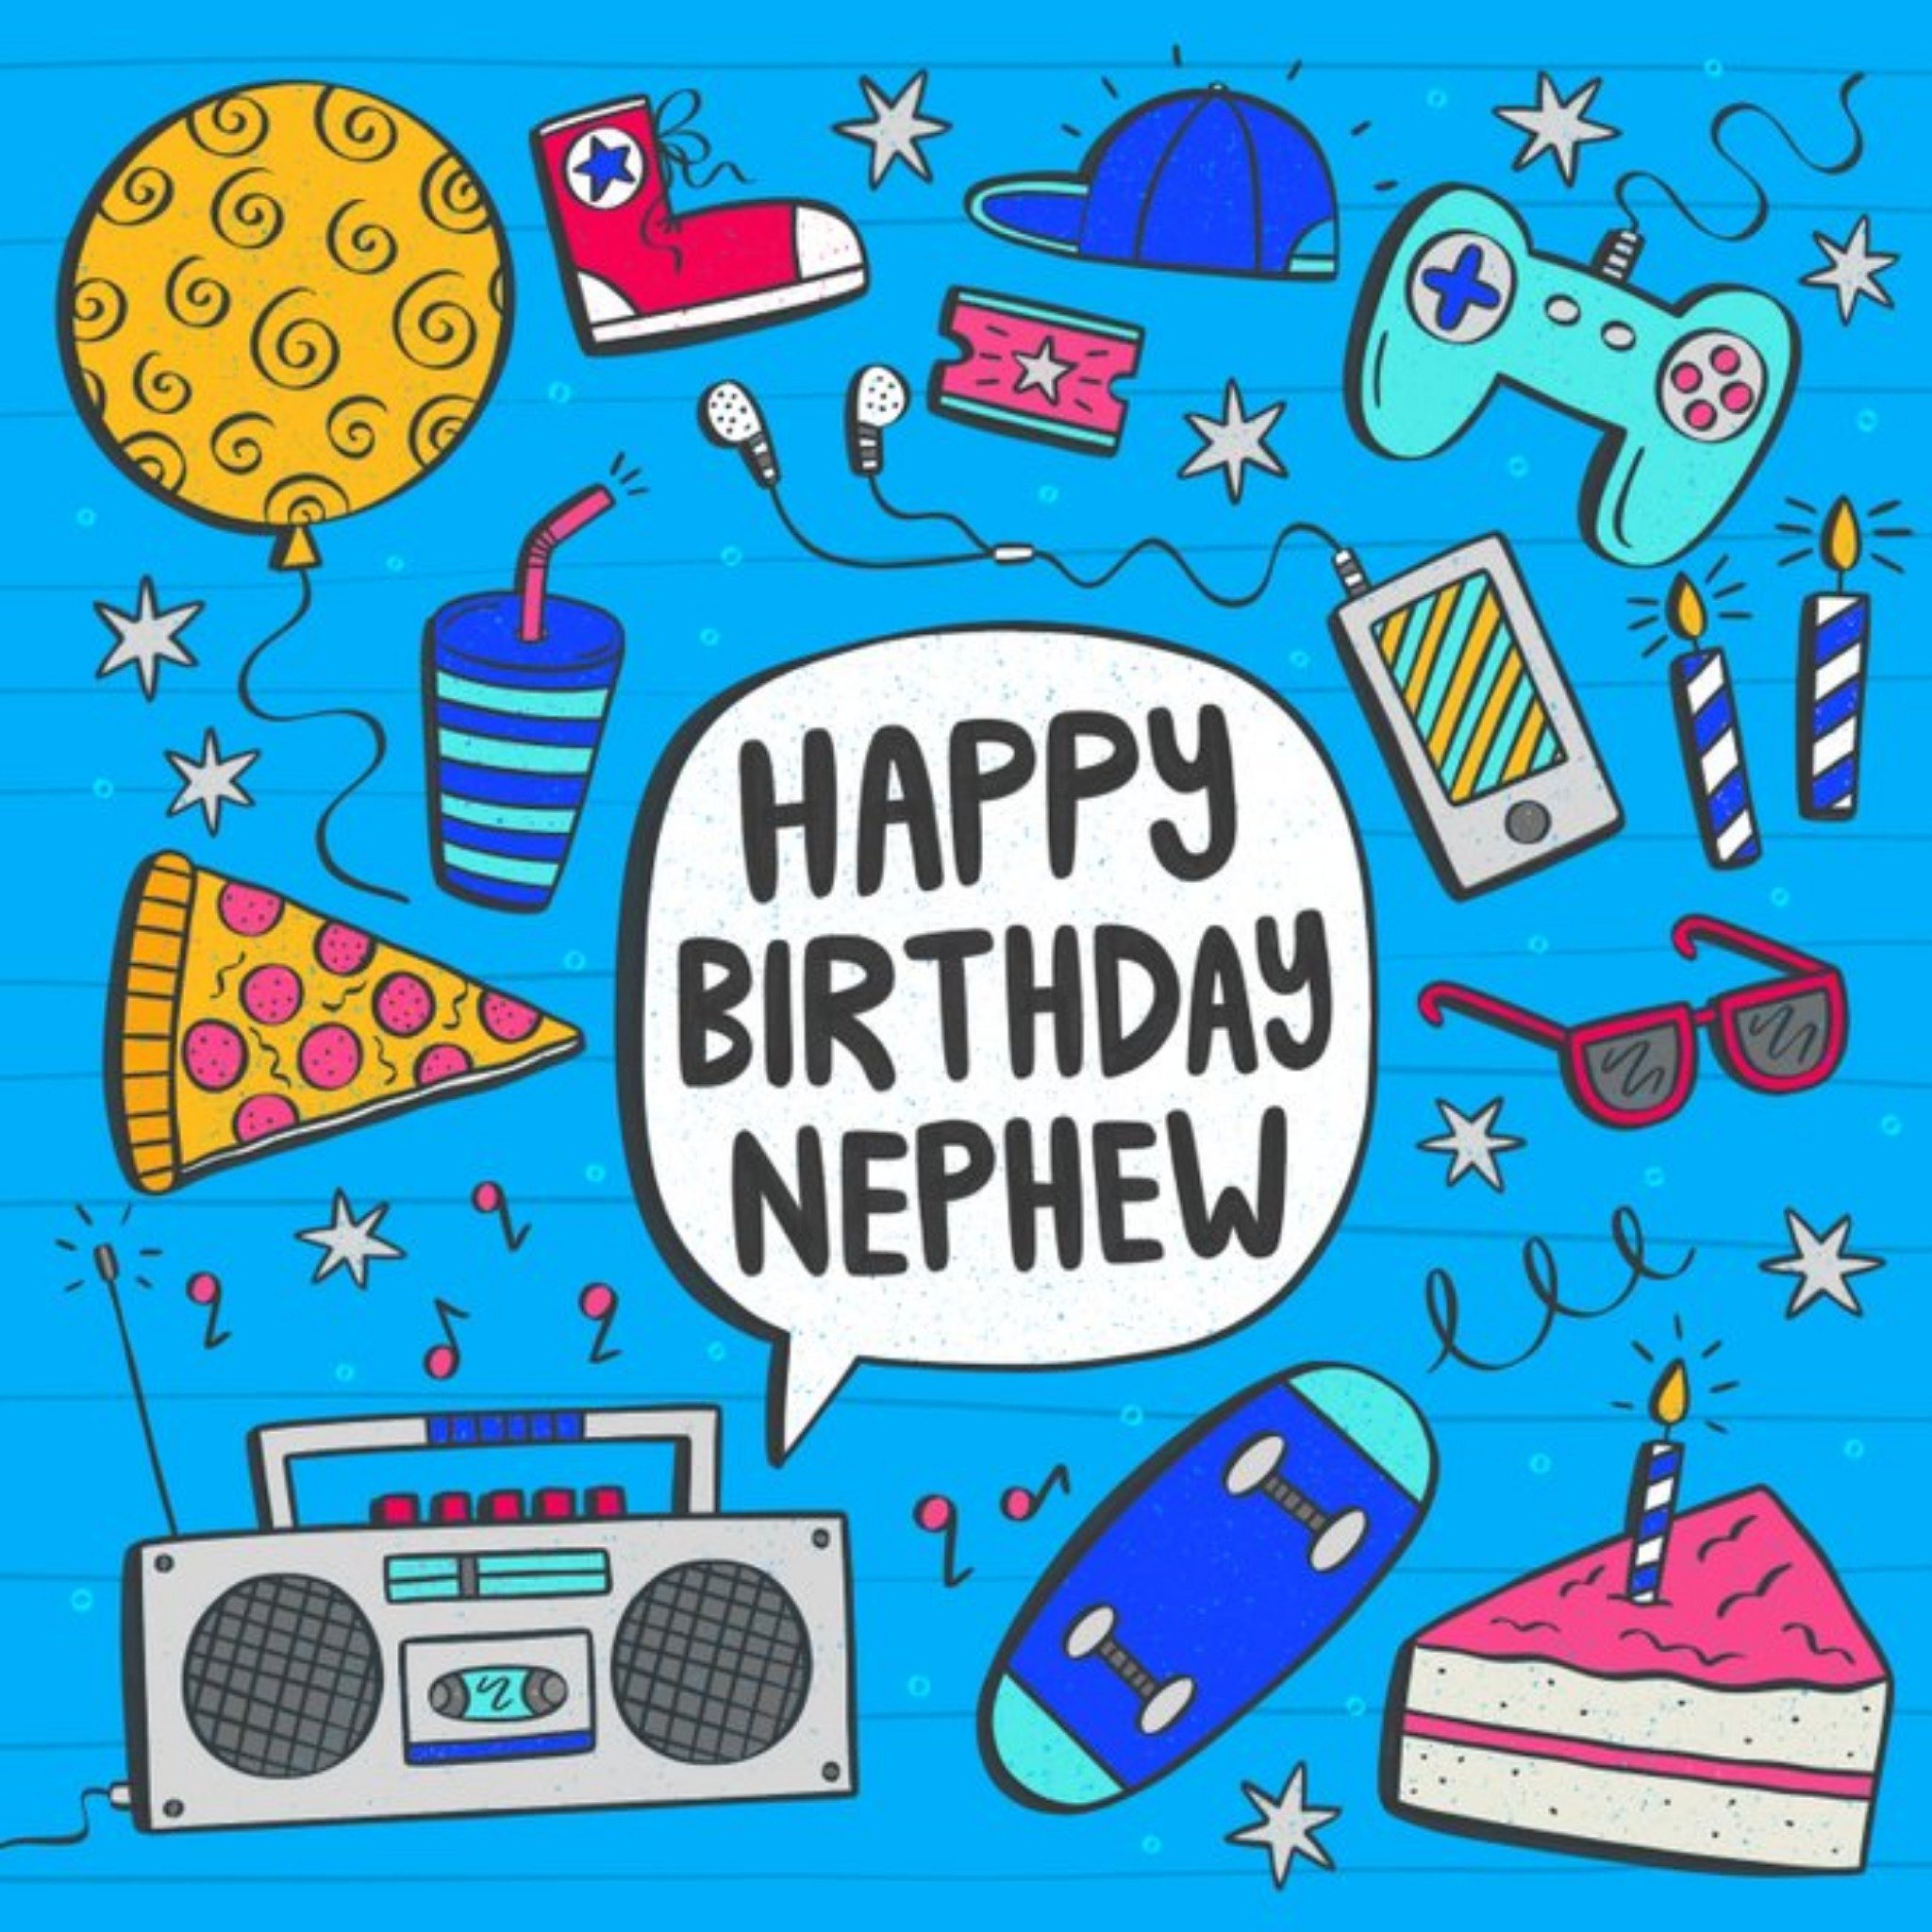 Moonpig Happy Birthday Nephew Doodle Hobbies Illustration Card, Square